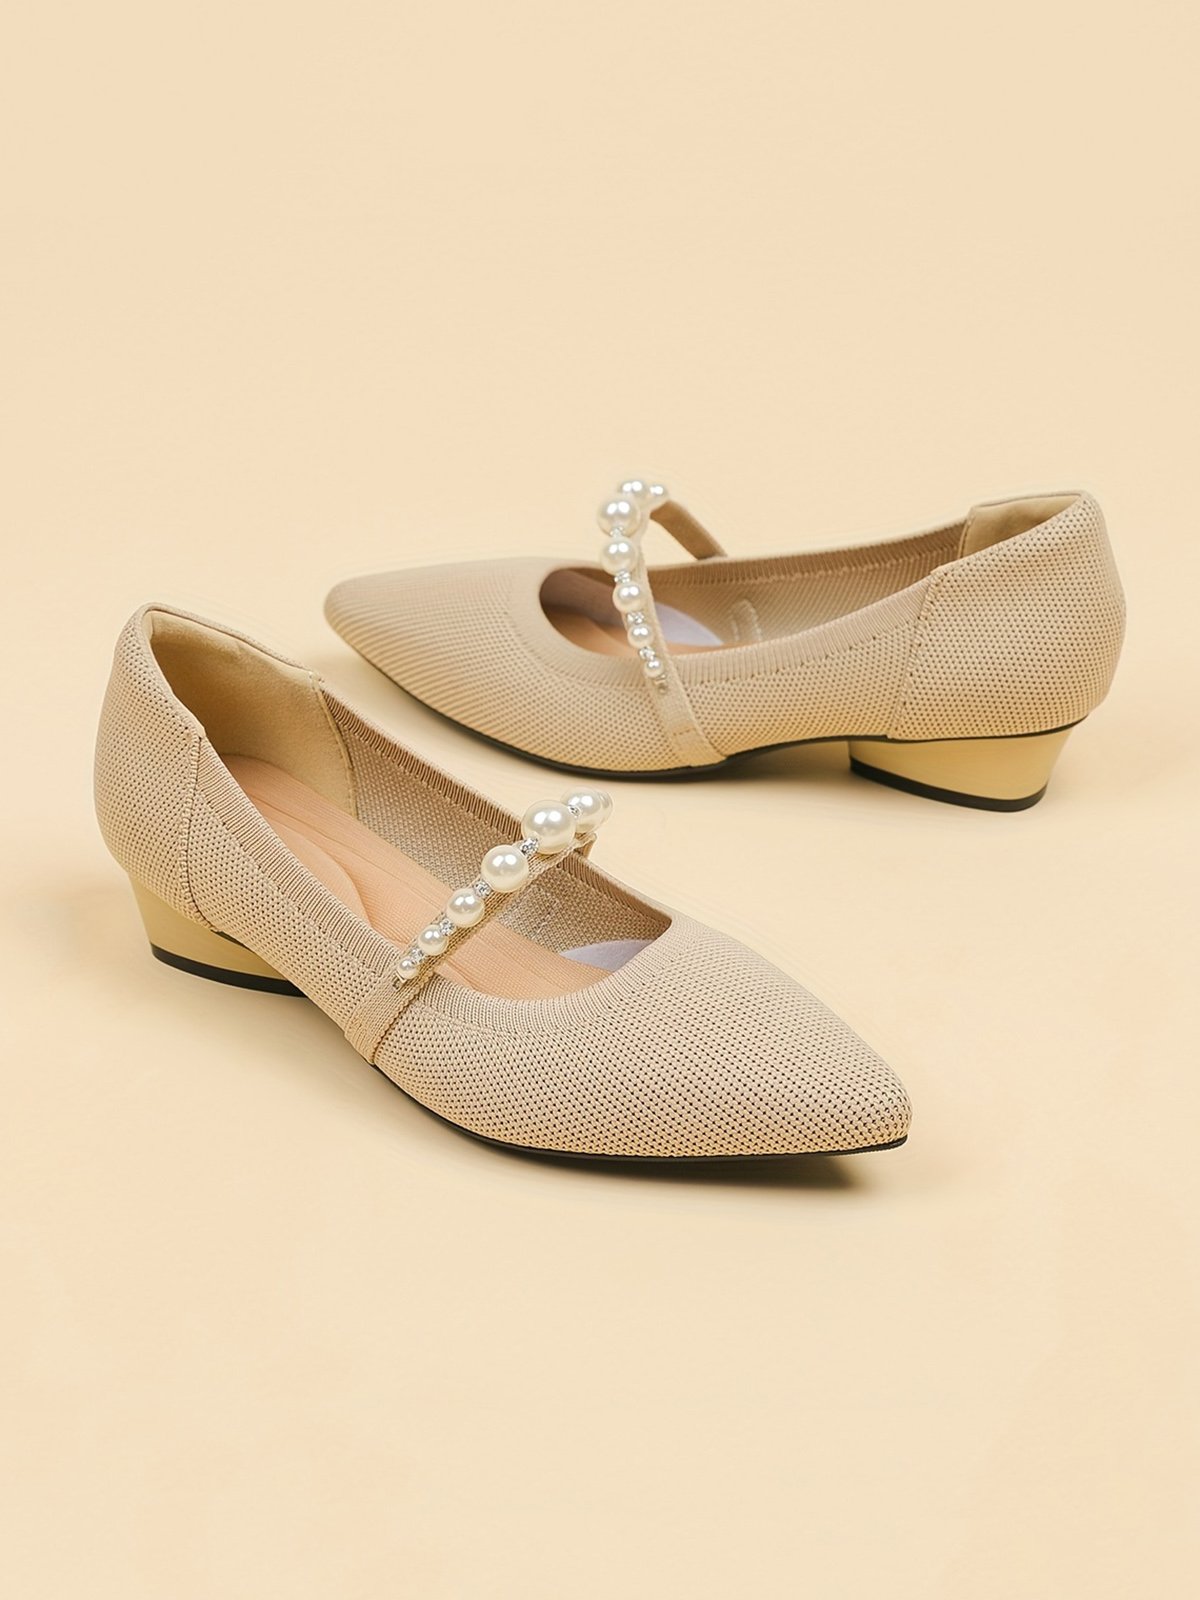 Elegant Imitation Pearl Breathable Mesh Fabric Low Heel Mary Jane Shoes